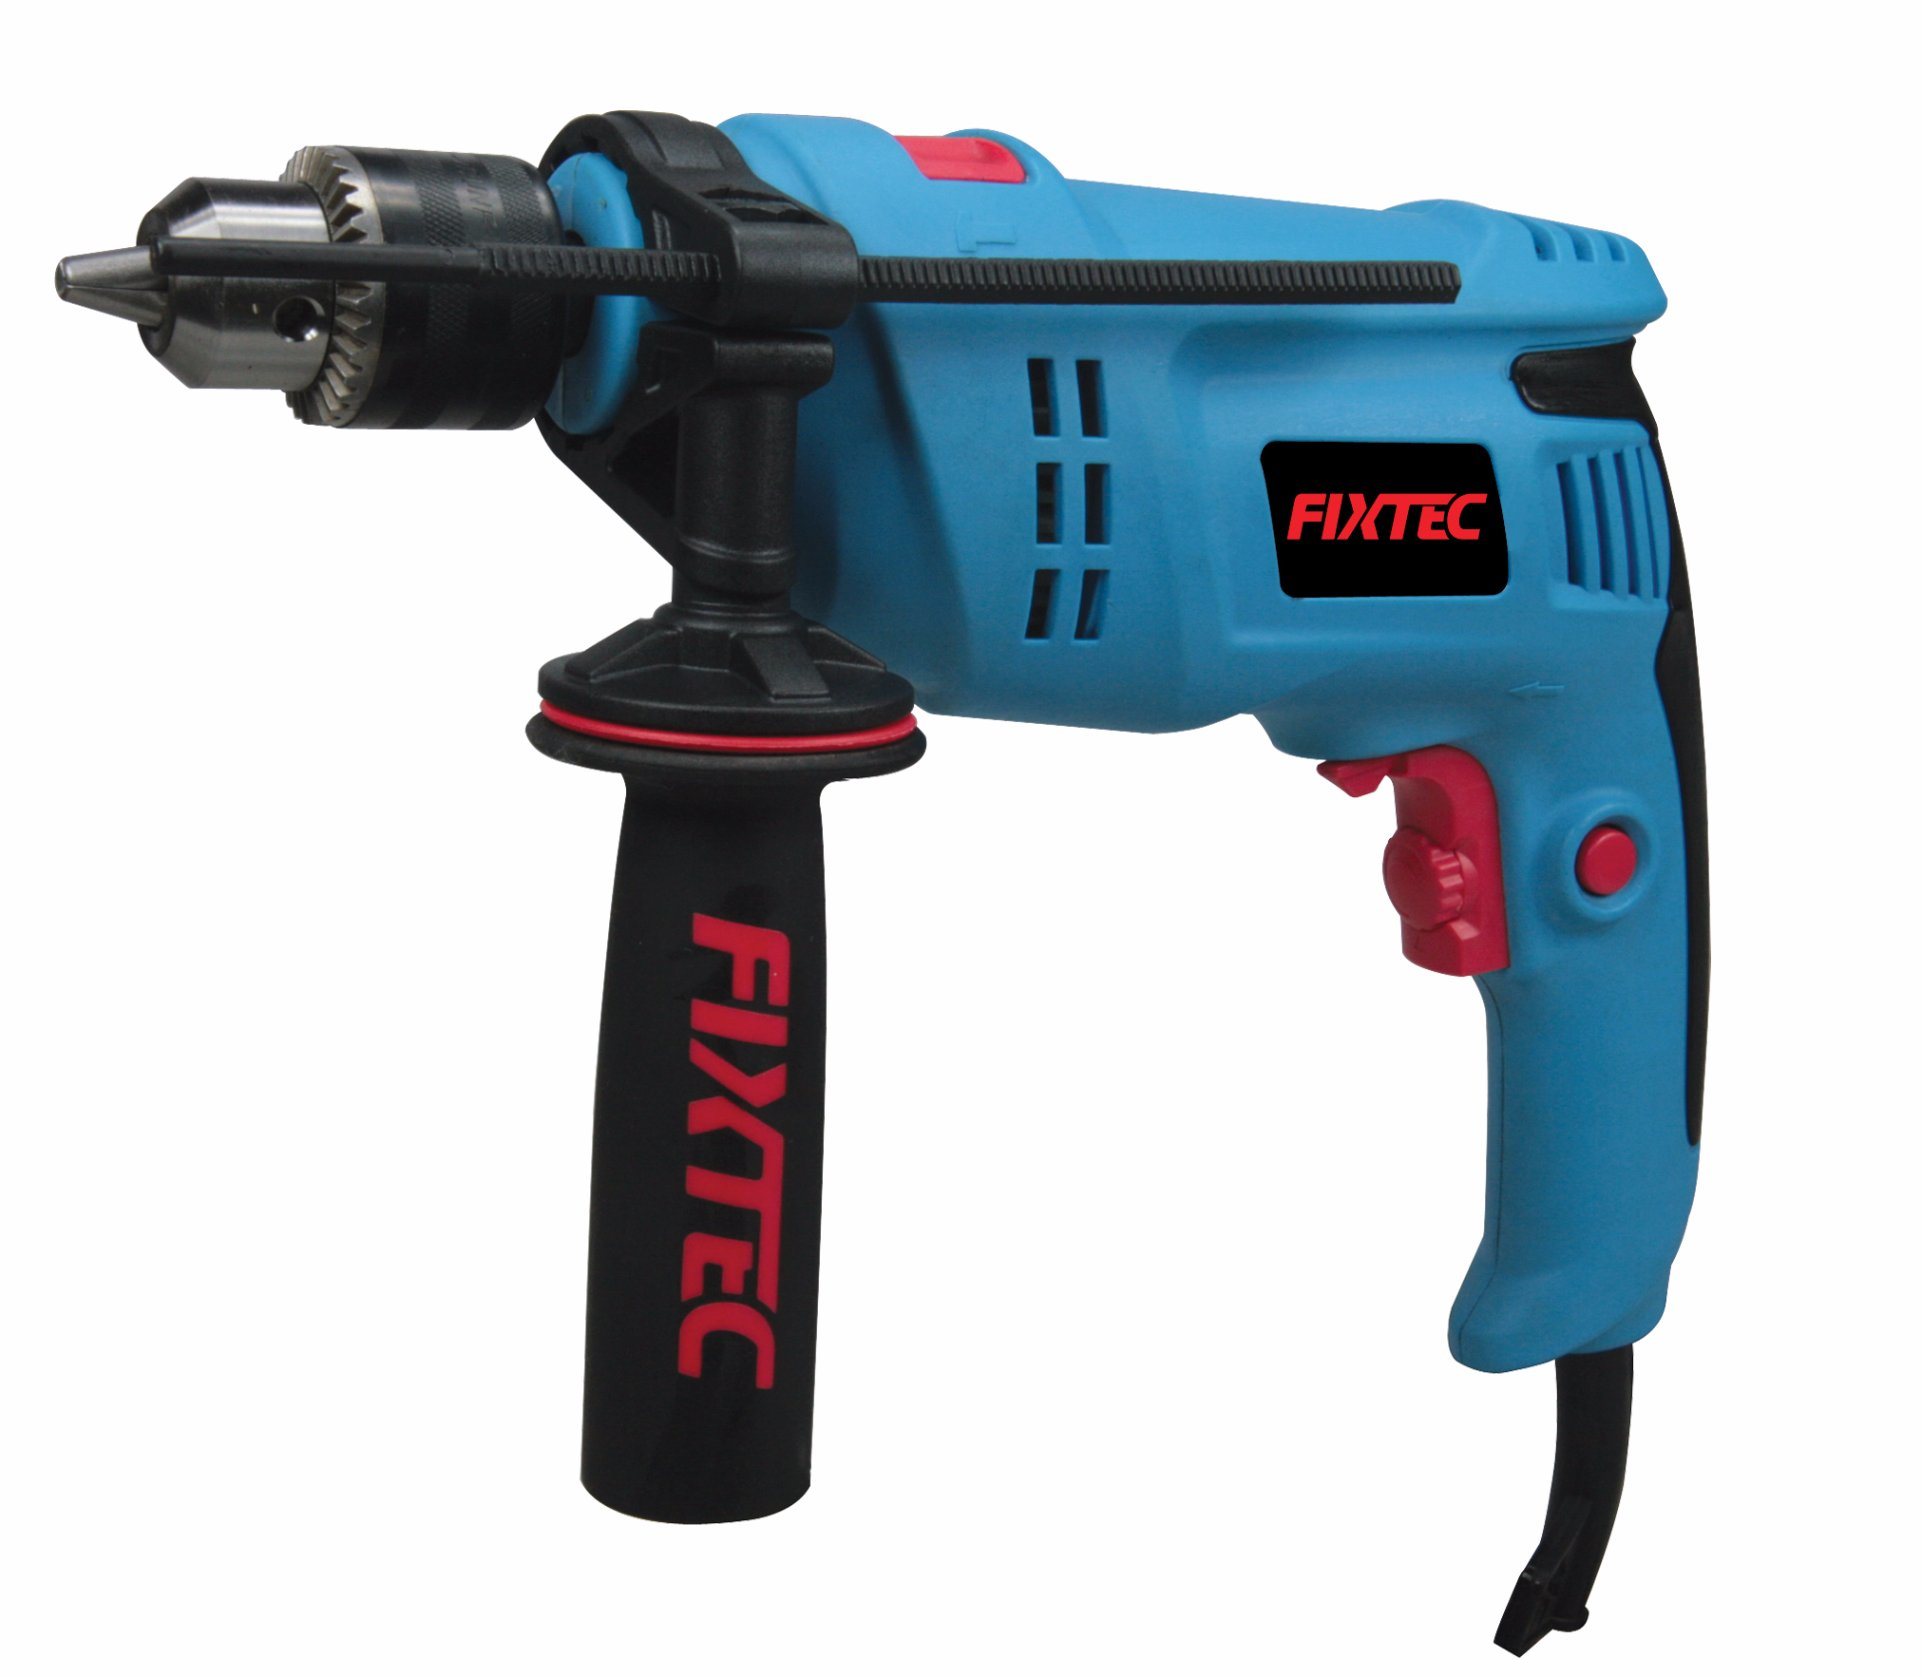 Fixtec Power Tool 800W Impact Drill